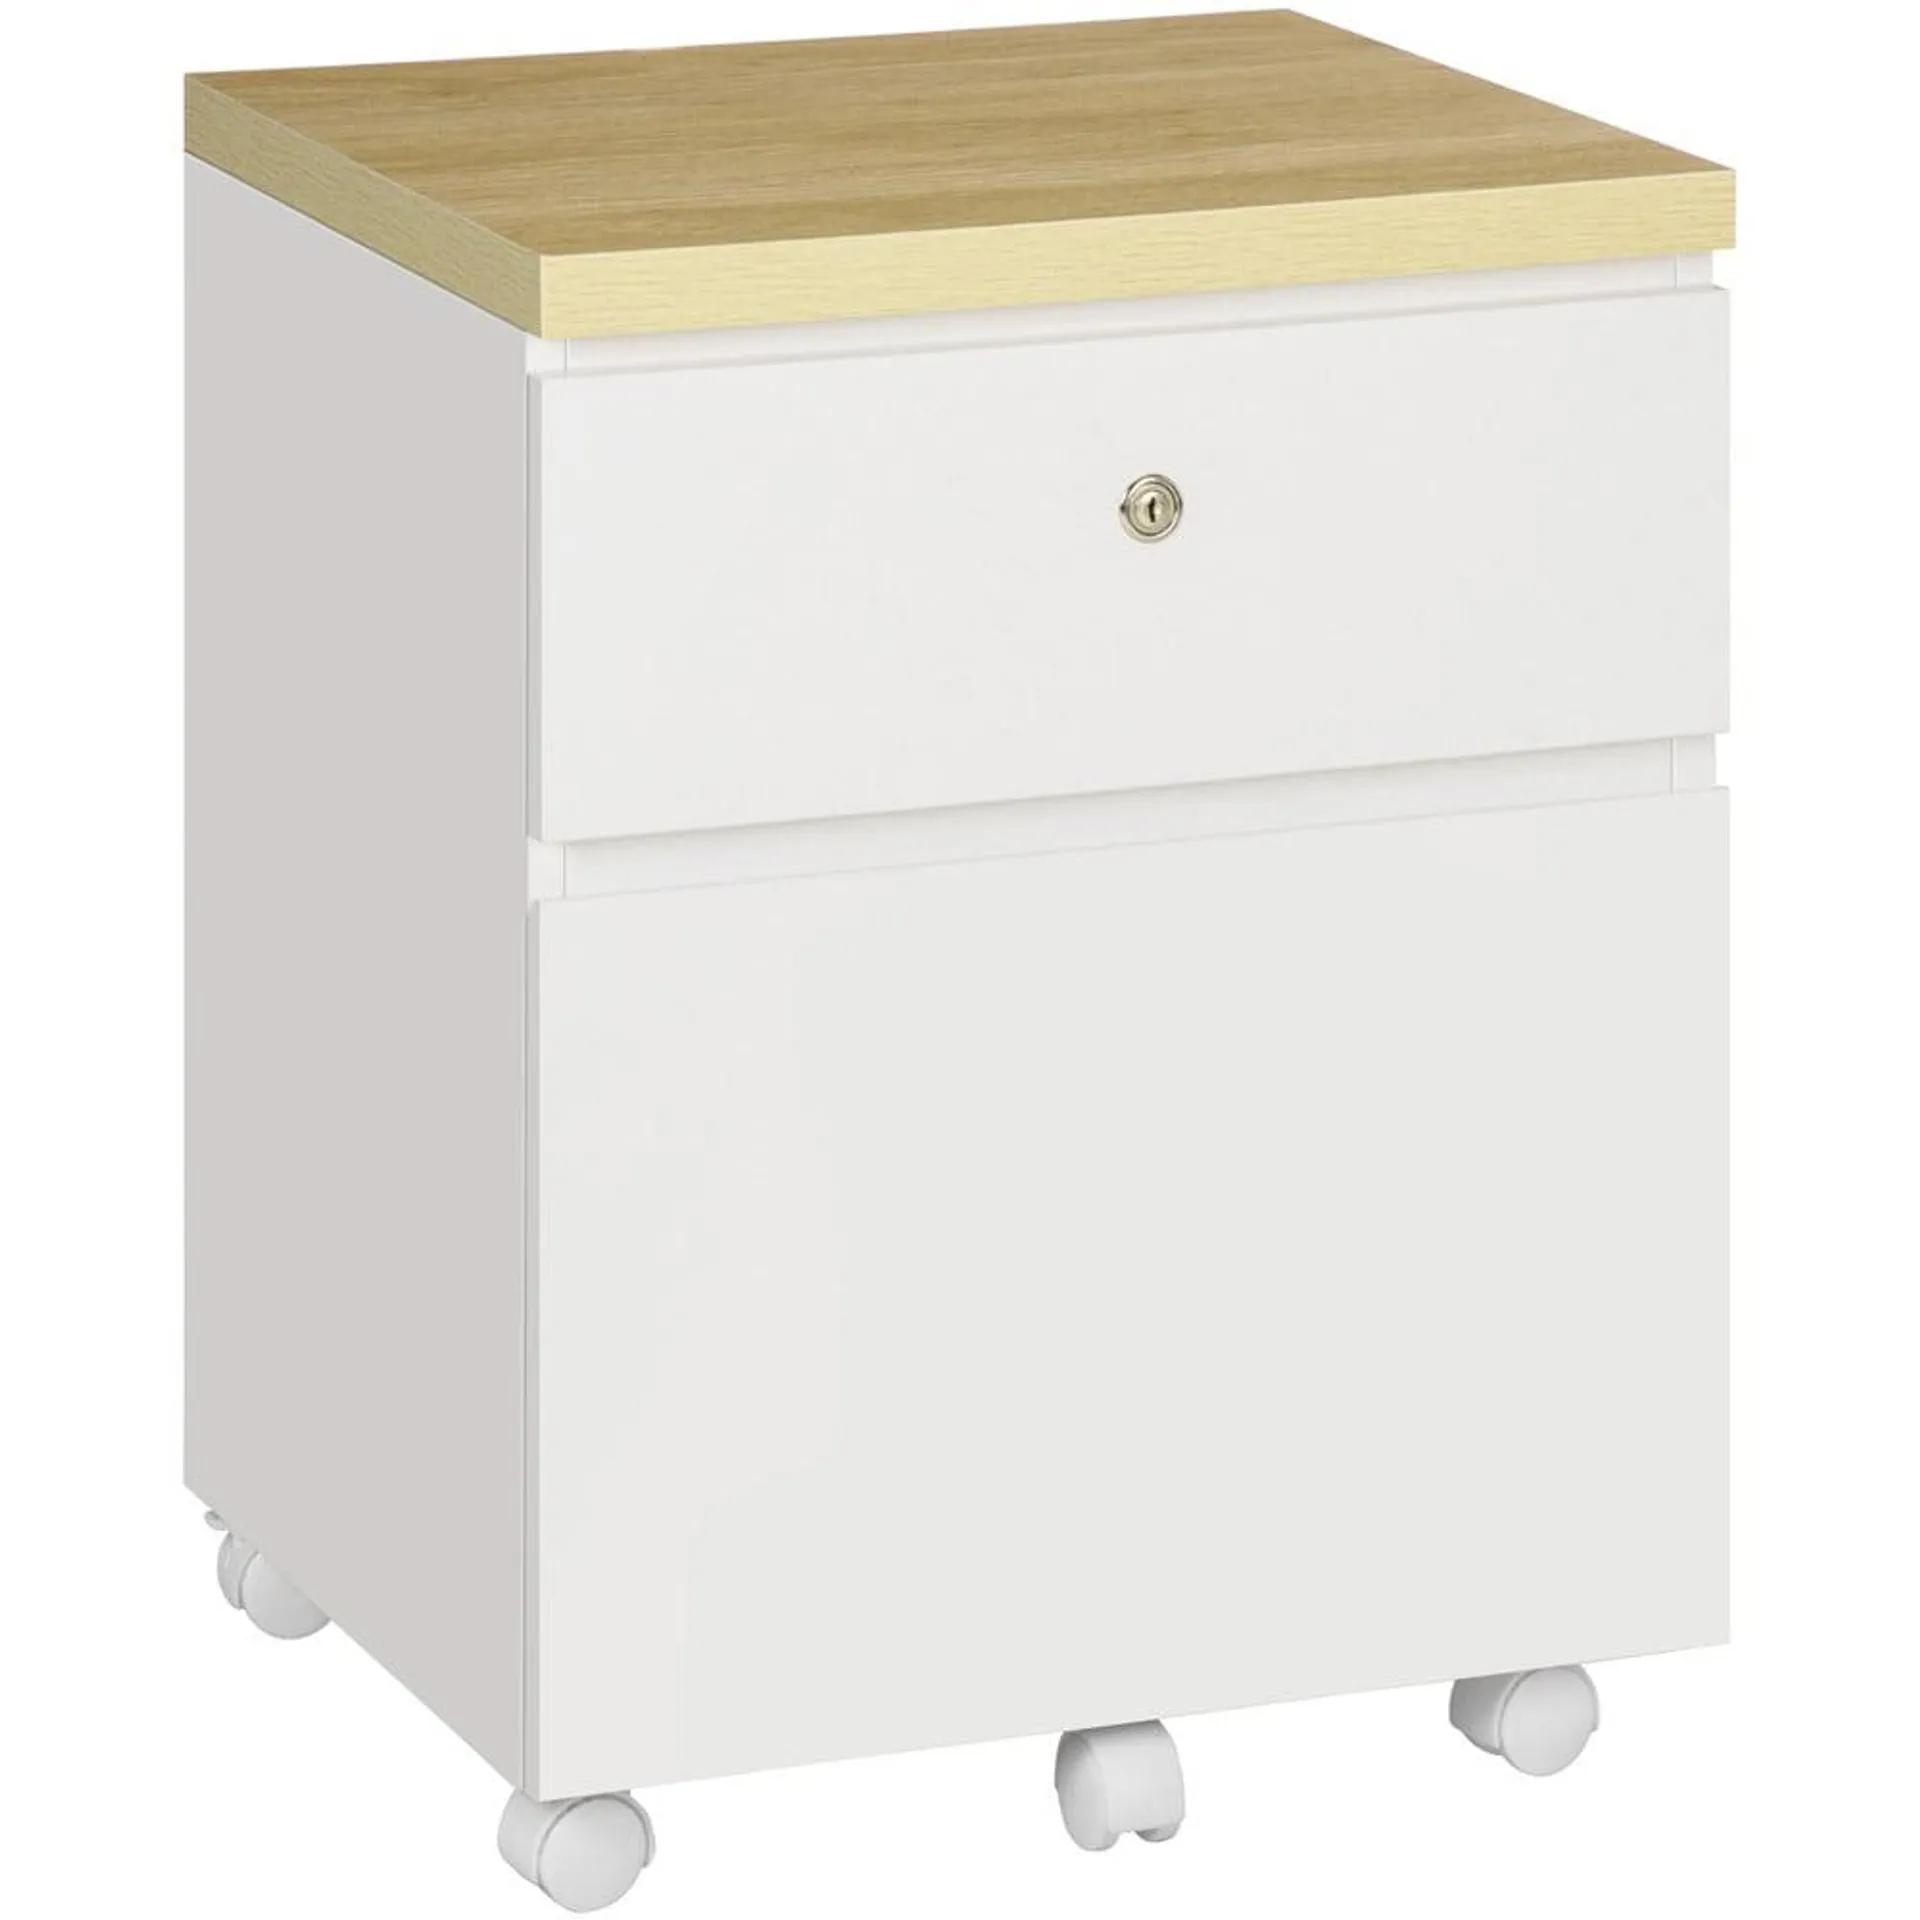 Vinsetto White 2 Drawer File Cabinet